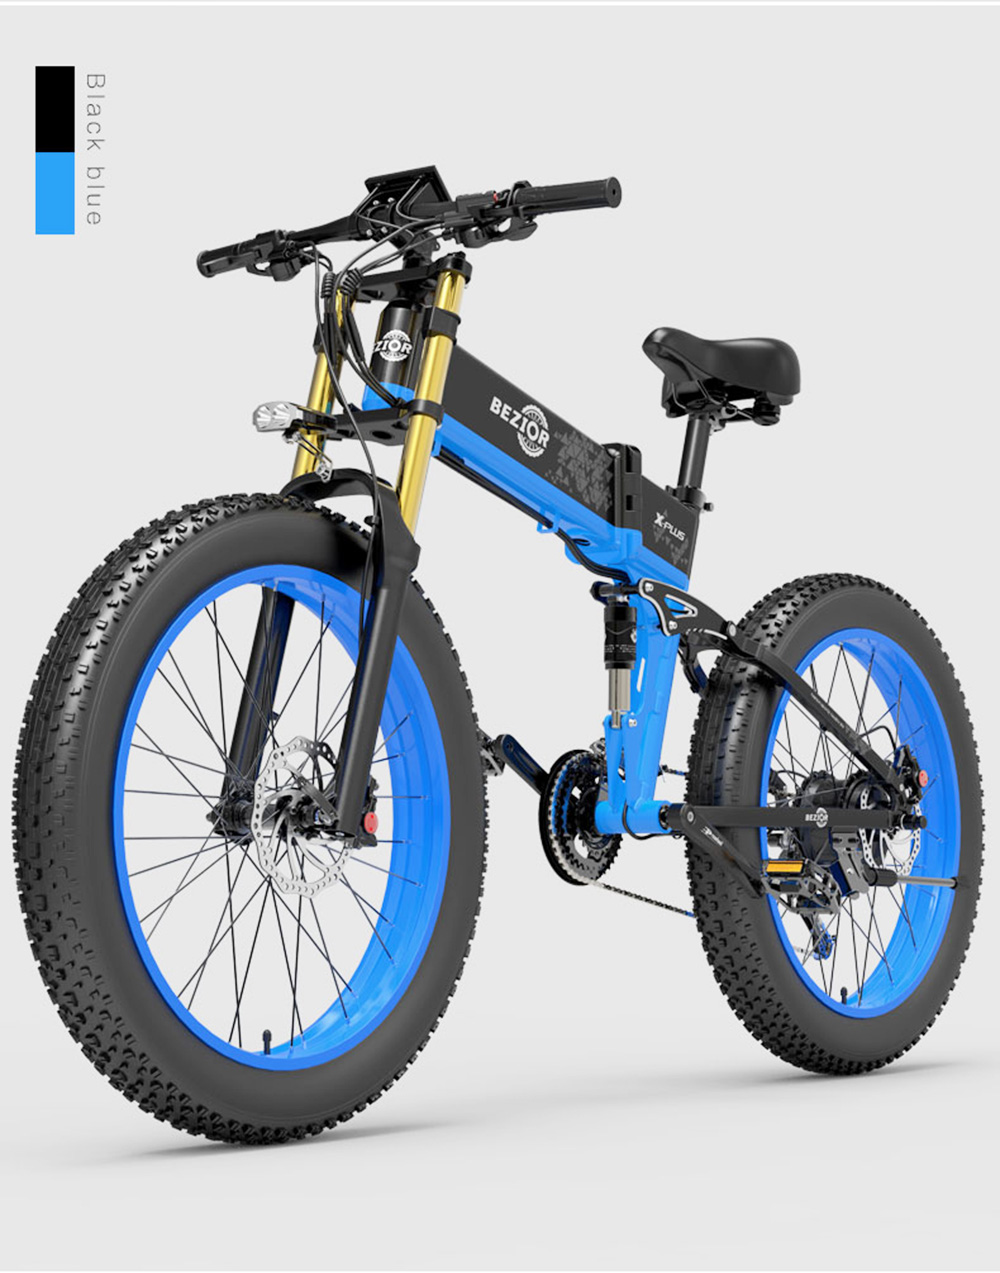 BEZIOR X-PLUS elektrische fiets 26 inch 1500 W 40 km/u 48 V 17,5 Ah accu blauw